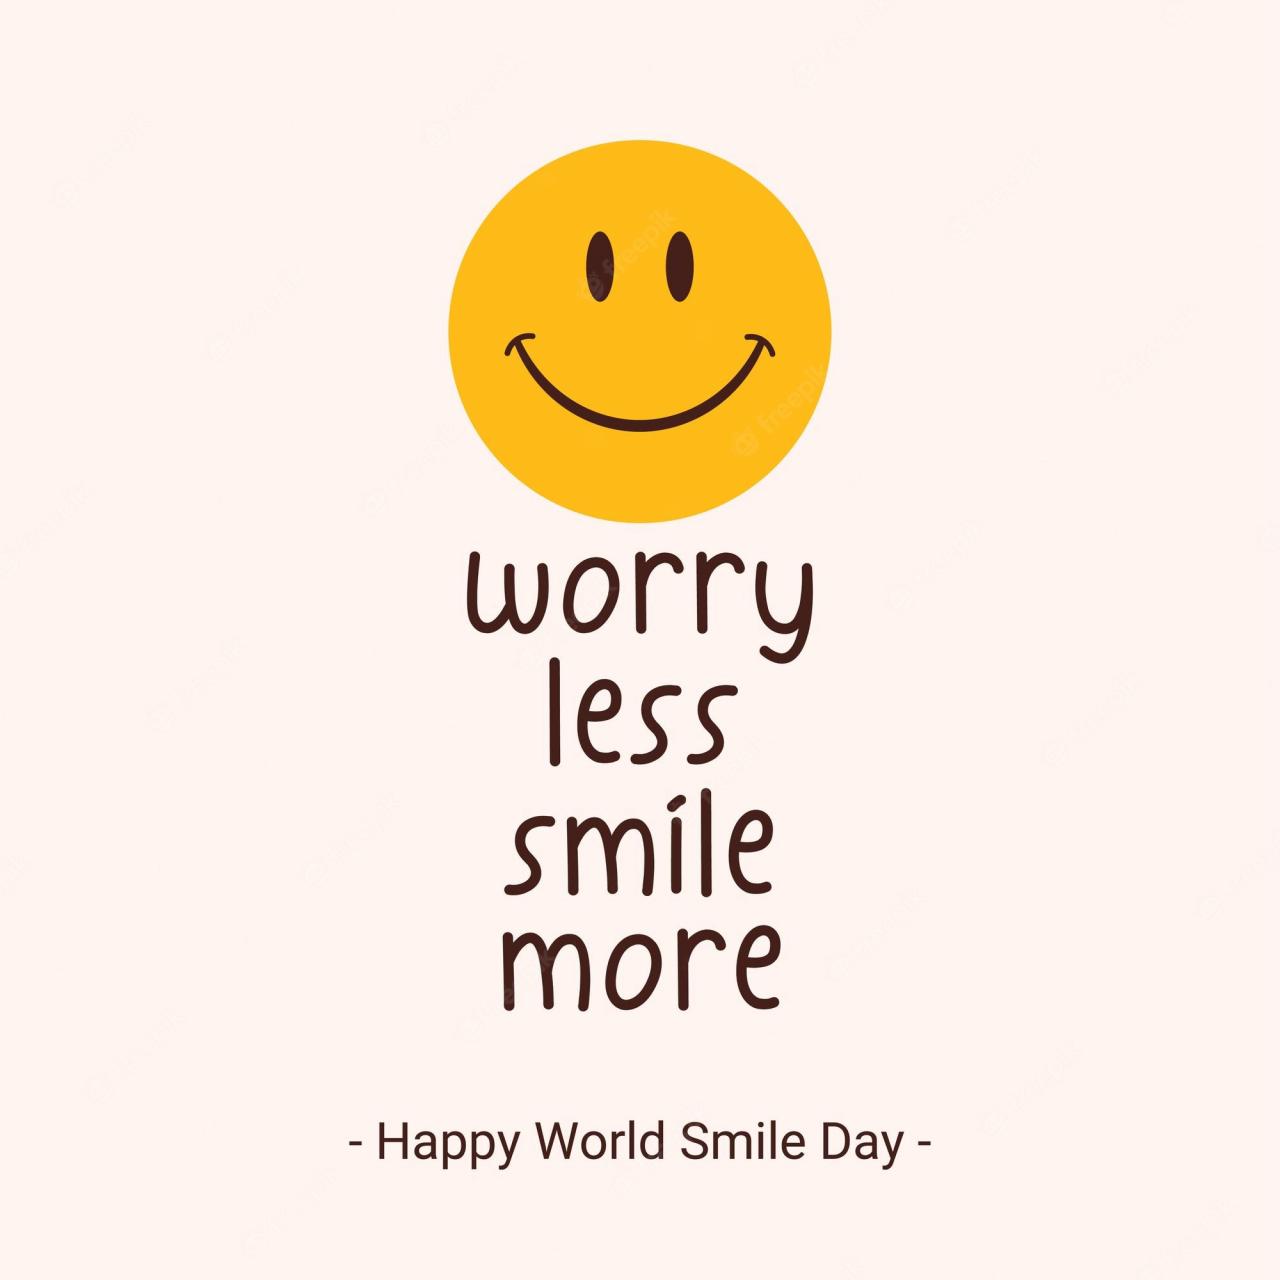 Premium Vector | World Smile Day Quote Ilustration